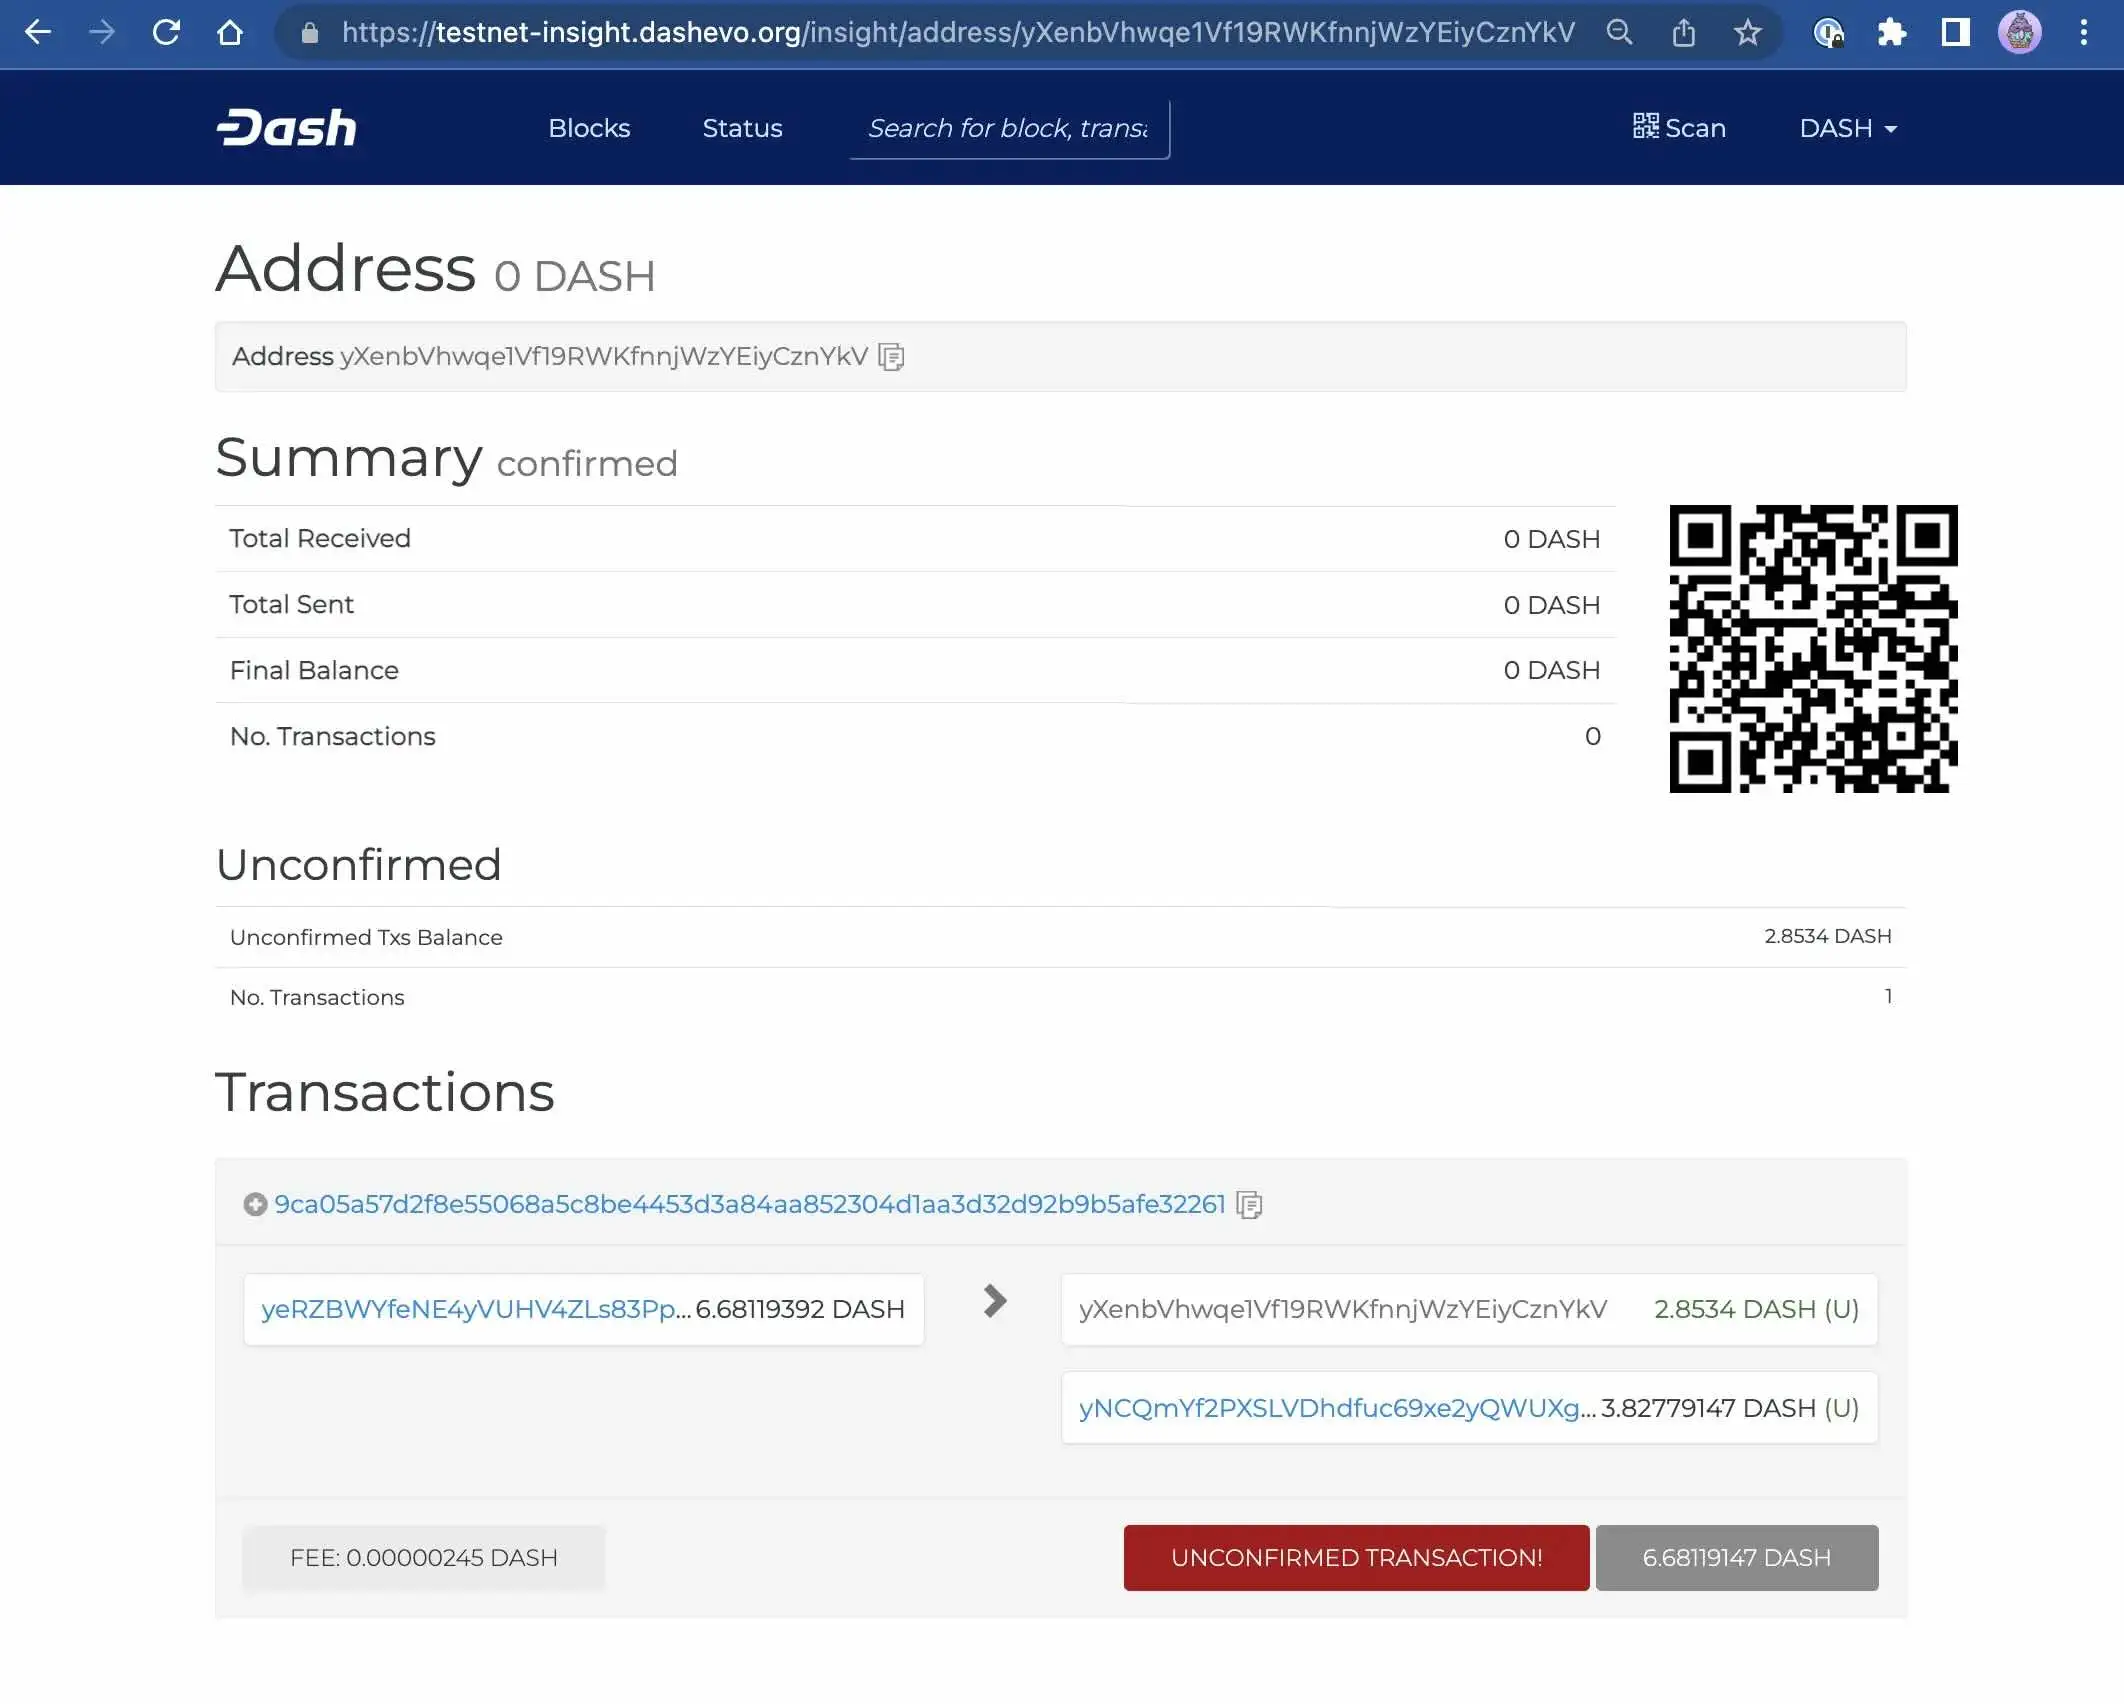 01 - Viewing new Dash wallet address on testnet block explorer